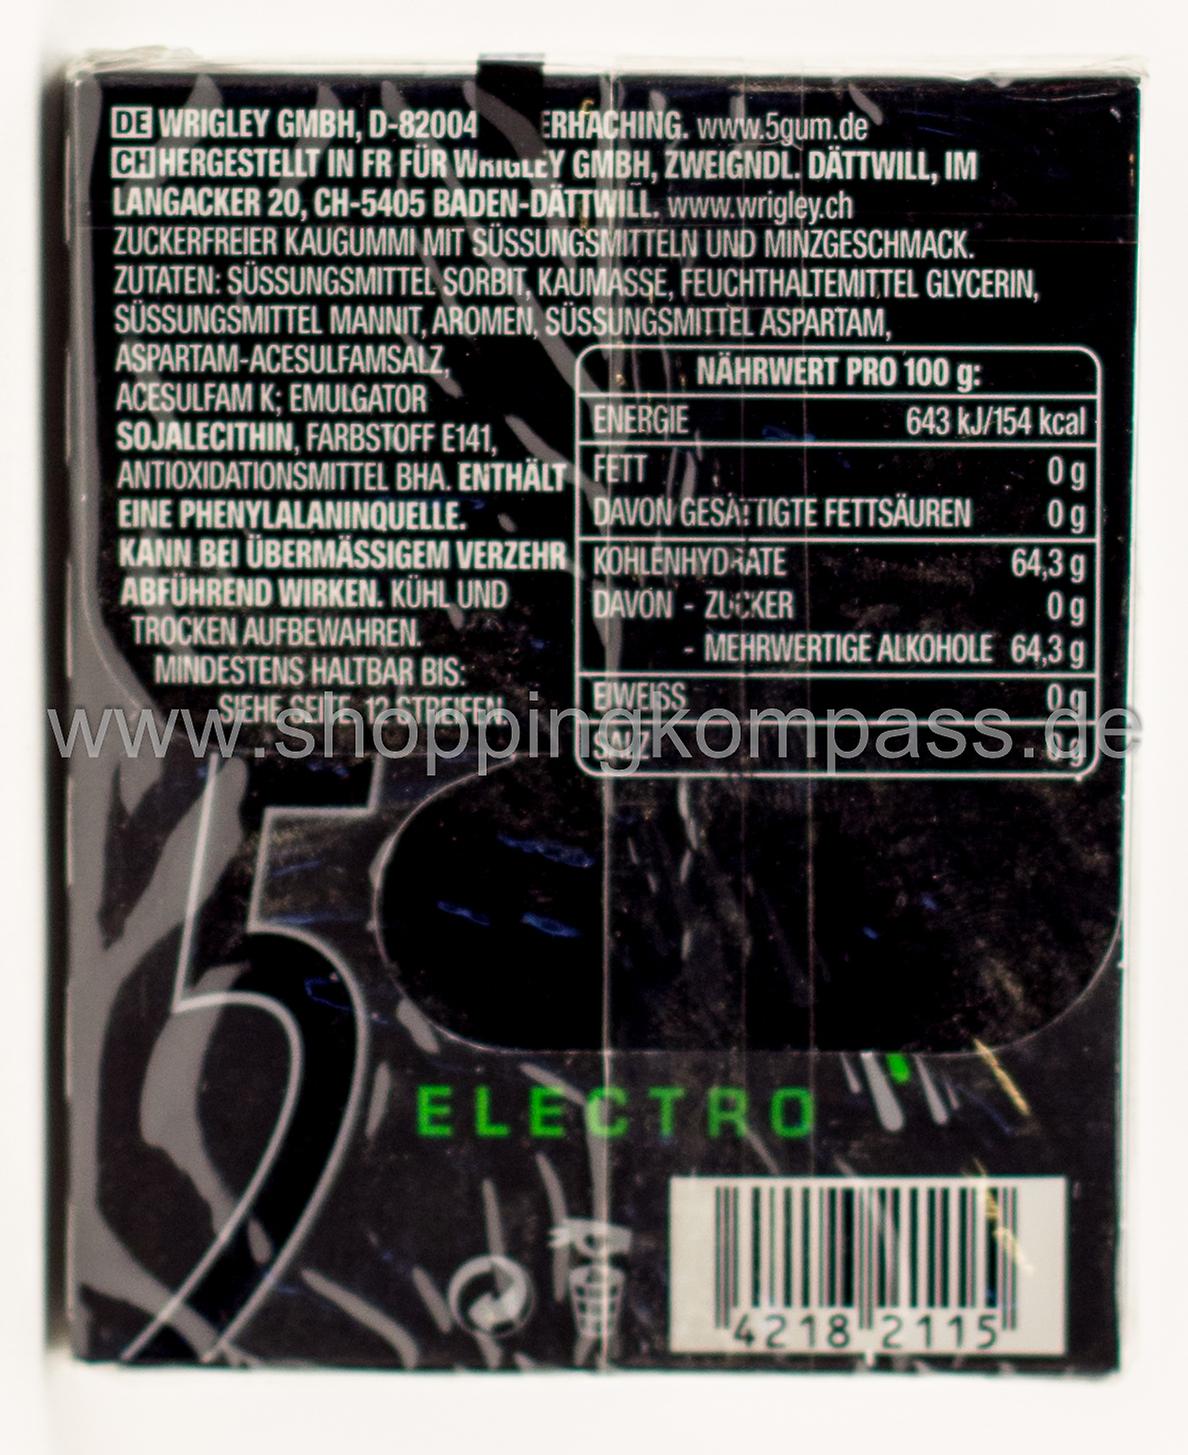 Wrigley's 5 Gum Kaugummi Electro Grüne Minze zuckerfrei 12 Streifen